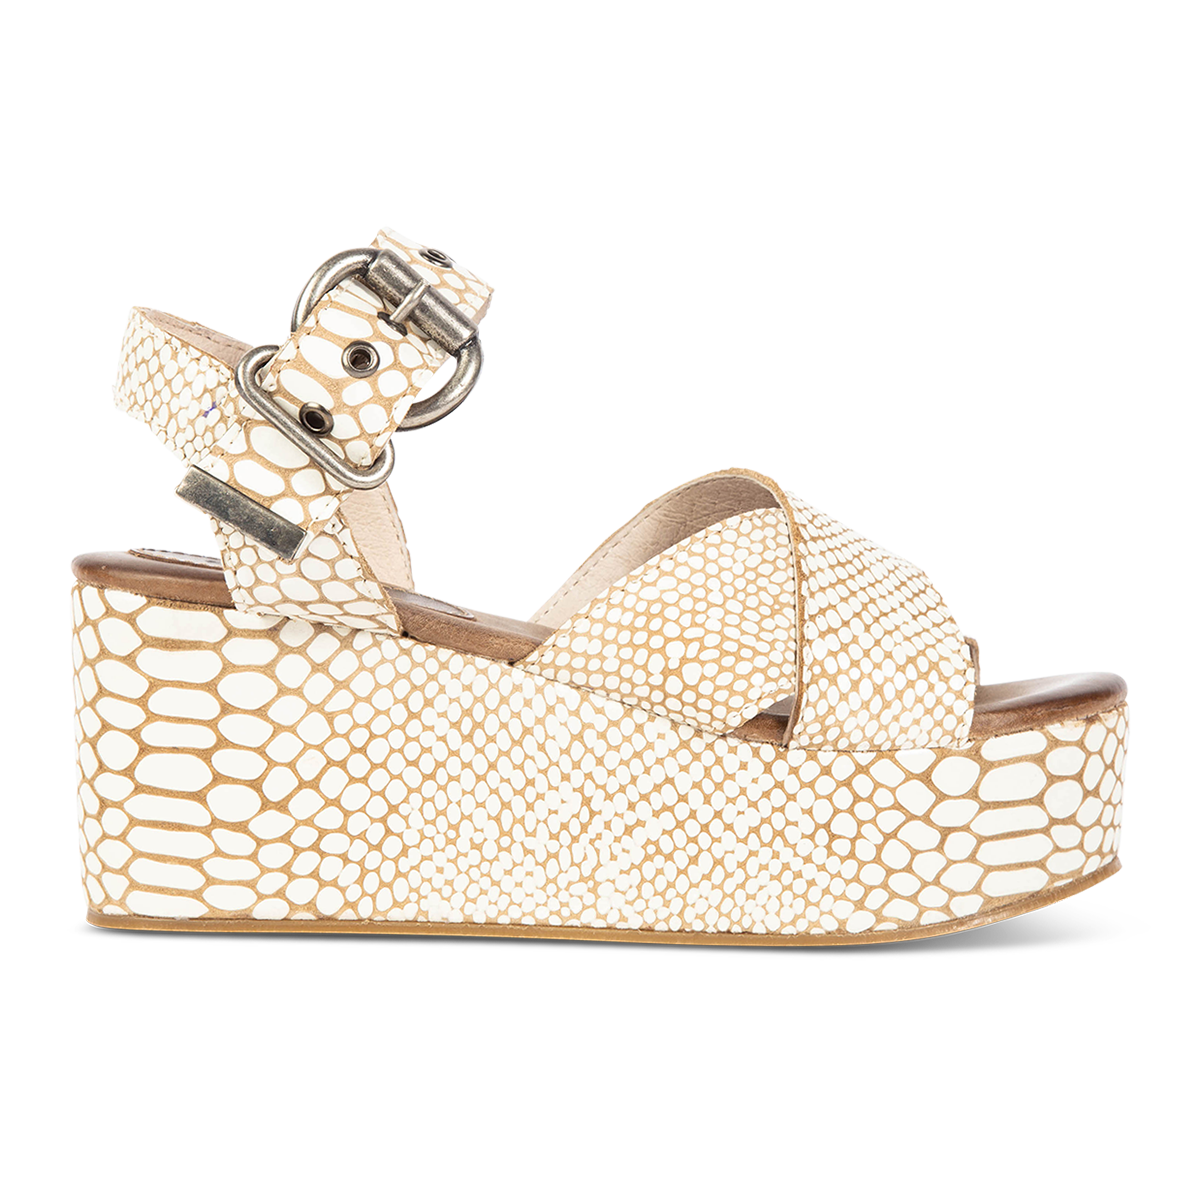 FREEBIRD women's Larae white snake wedge sandal with platform heel and an adjustable ankle strap